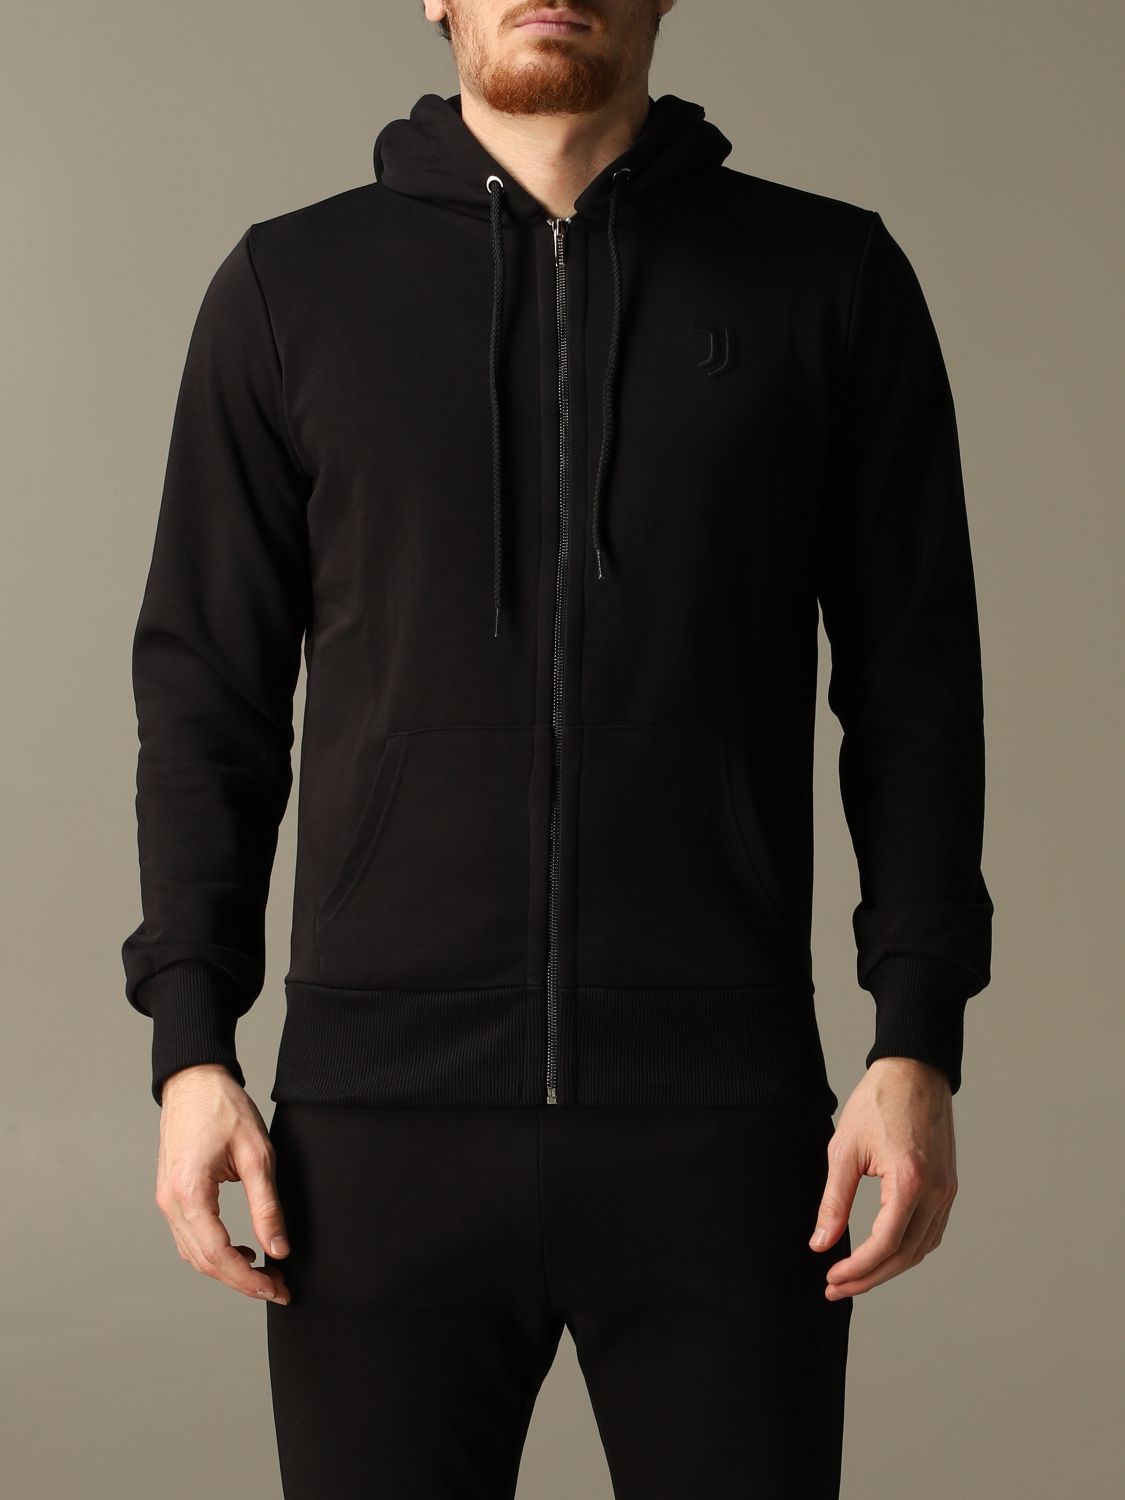 Sweatshirt Juventus Premium: Sweatshirt herren Juventus Premium schwarz 1